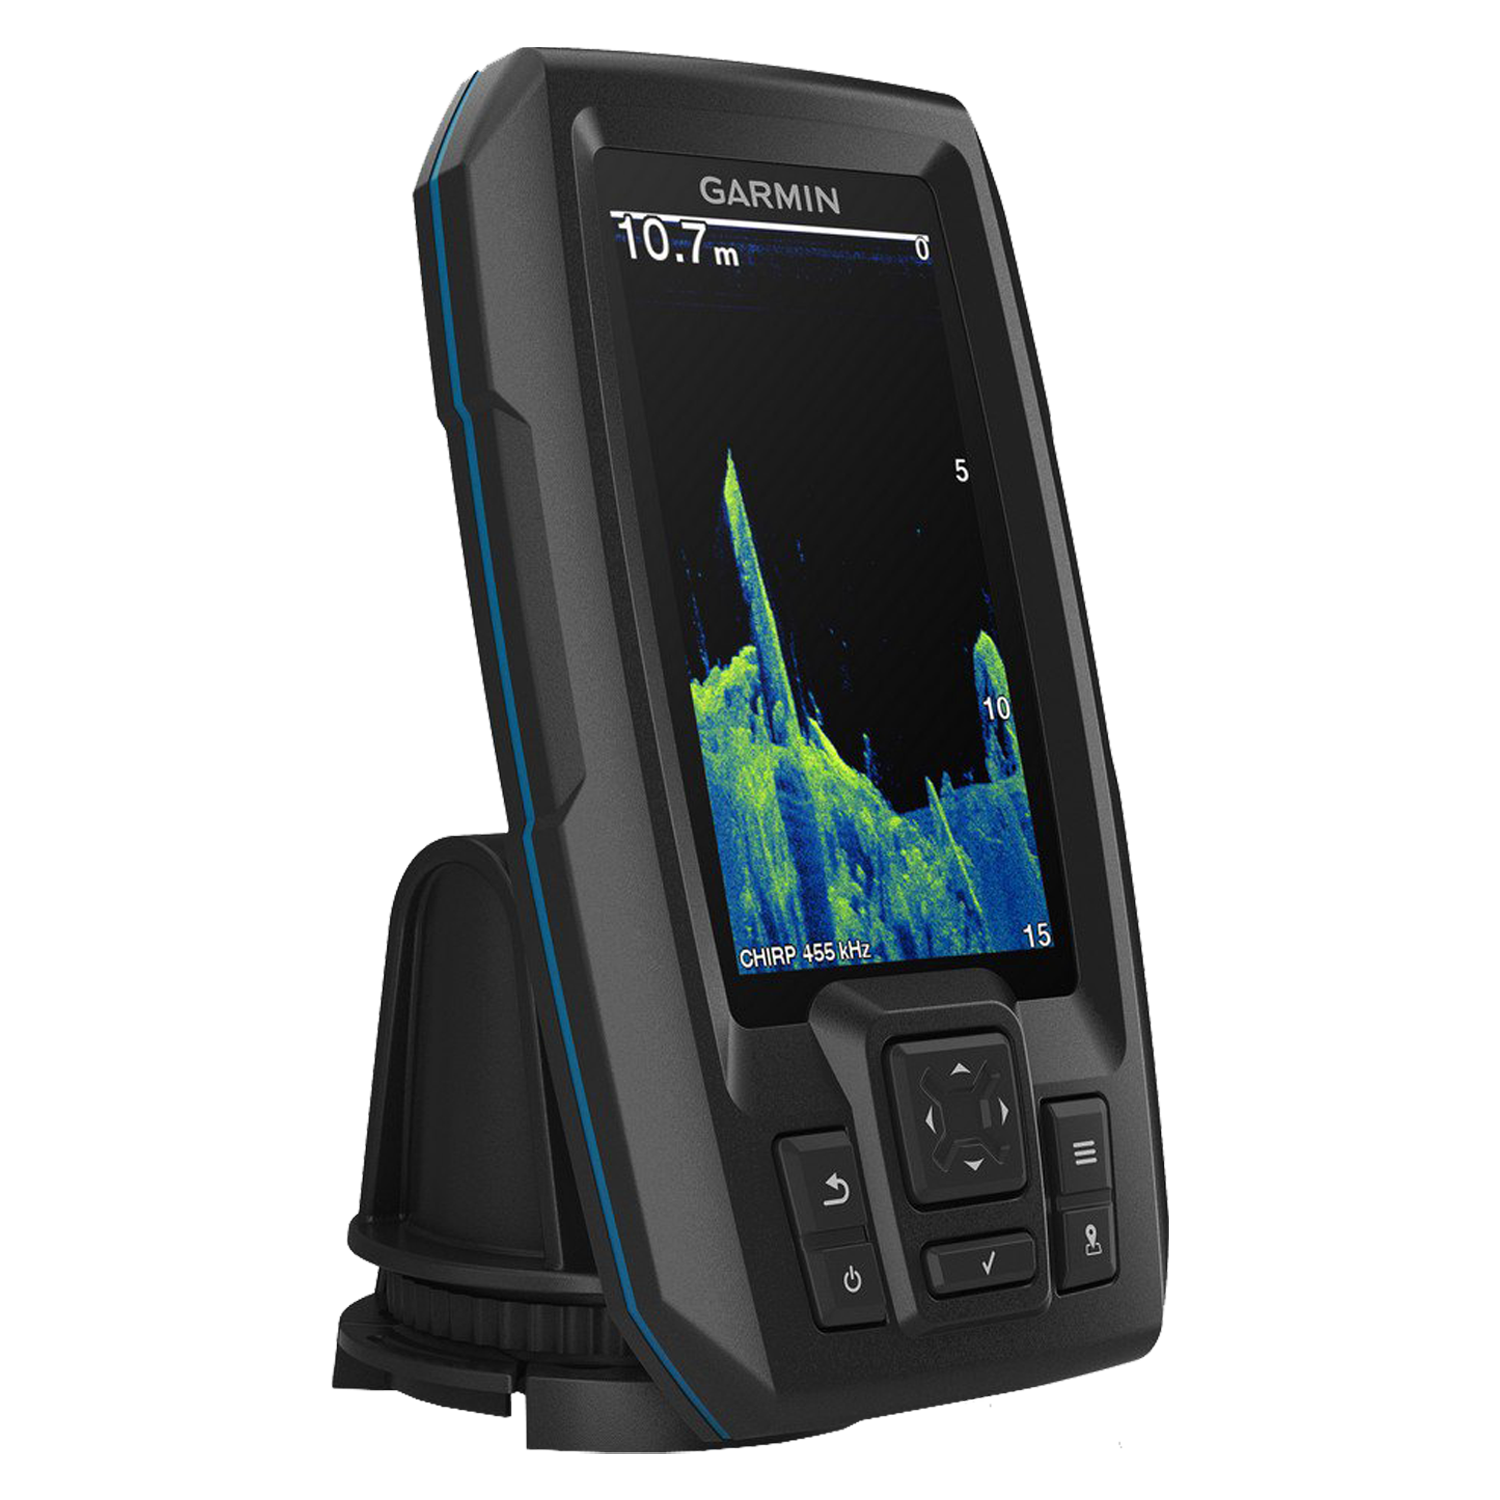 Sonar Garmin Para Pesca Striker 4 Plus + Transducer GT20 010-02550-01